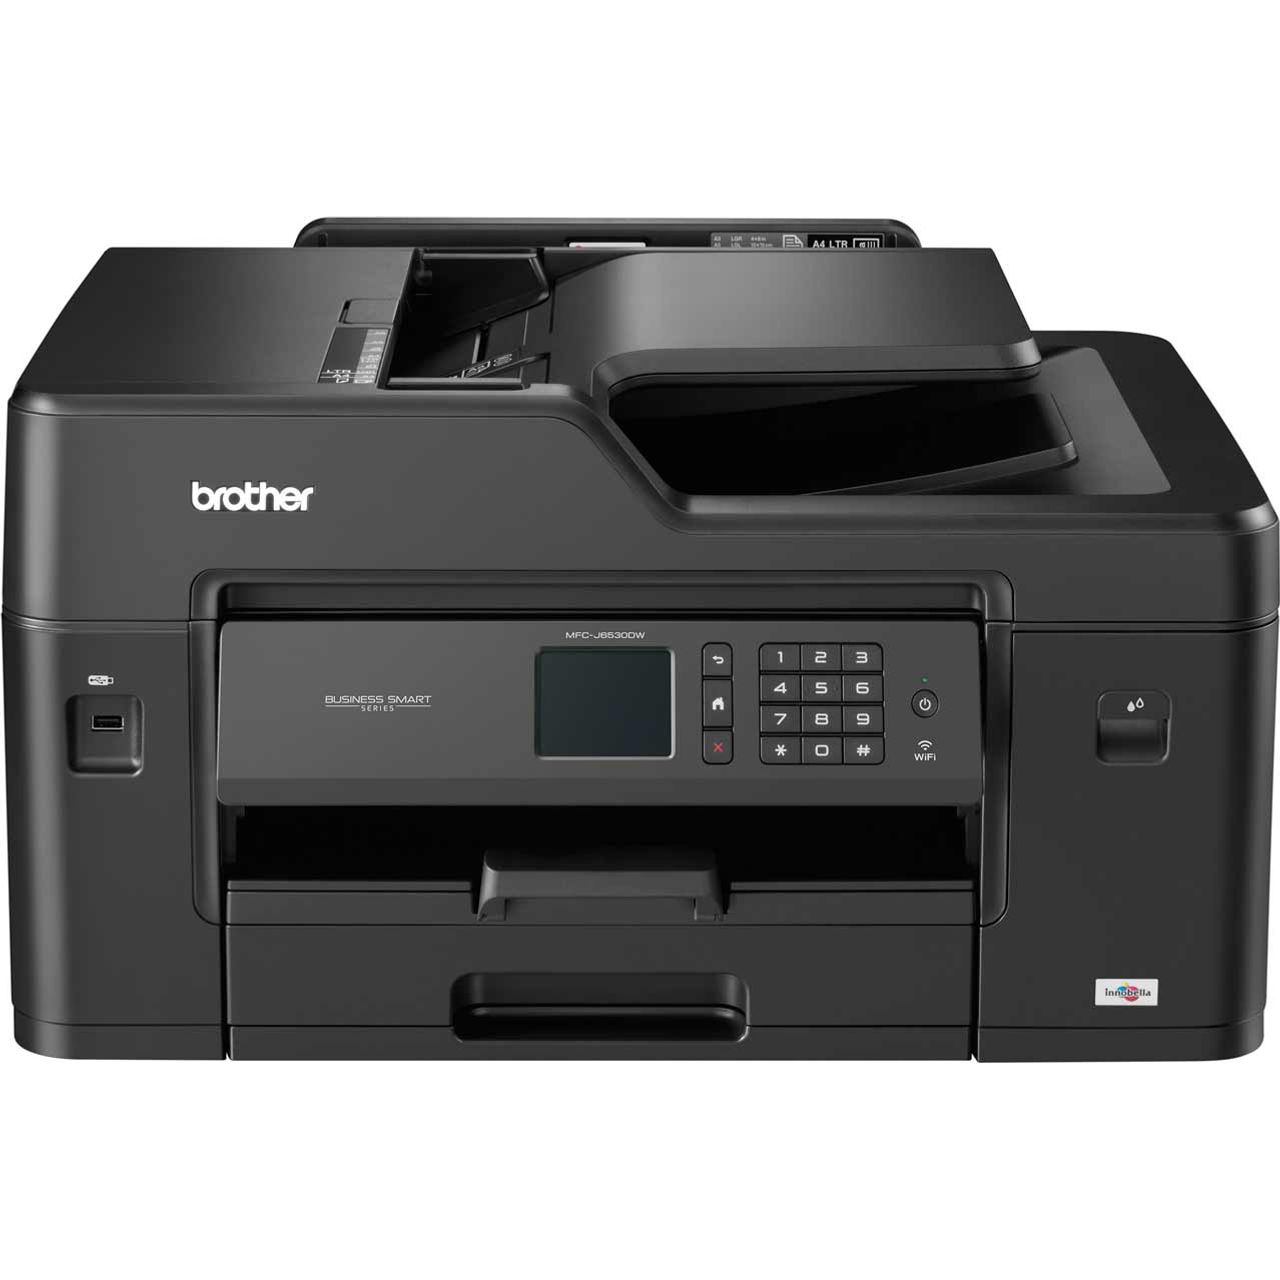 Brother MFC-J6530DW Inkjet All-In-One Inkjet Printer Review